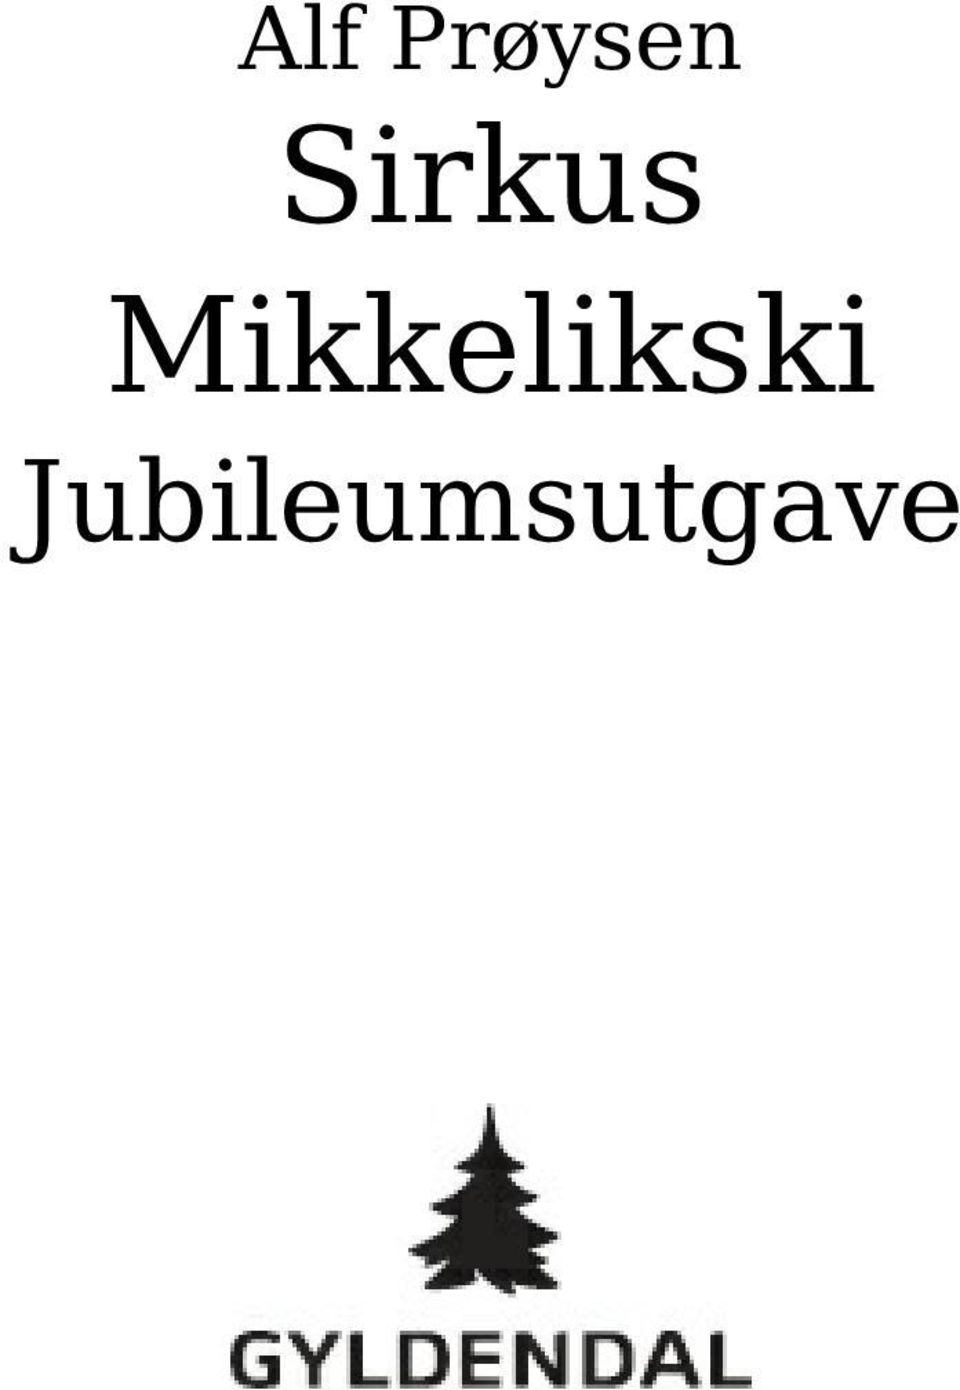 Mikkelikski